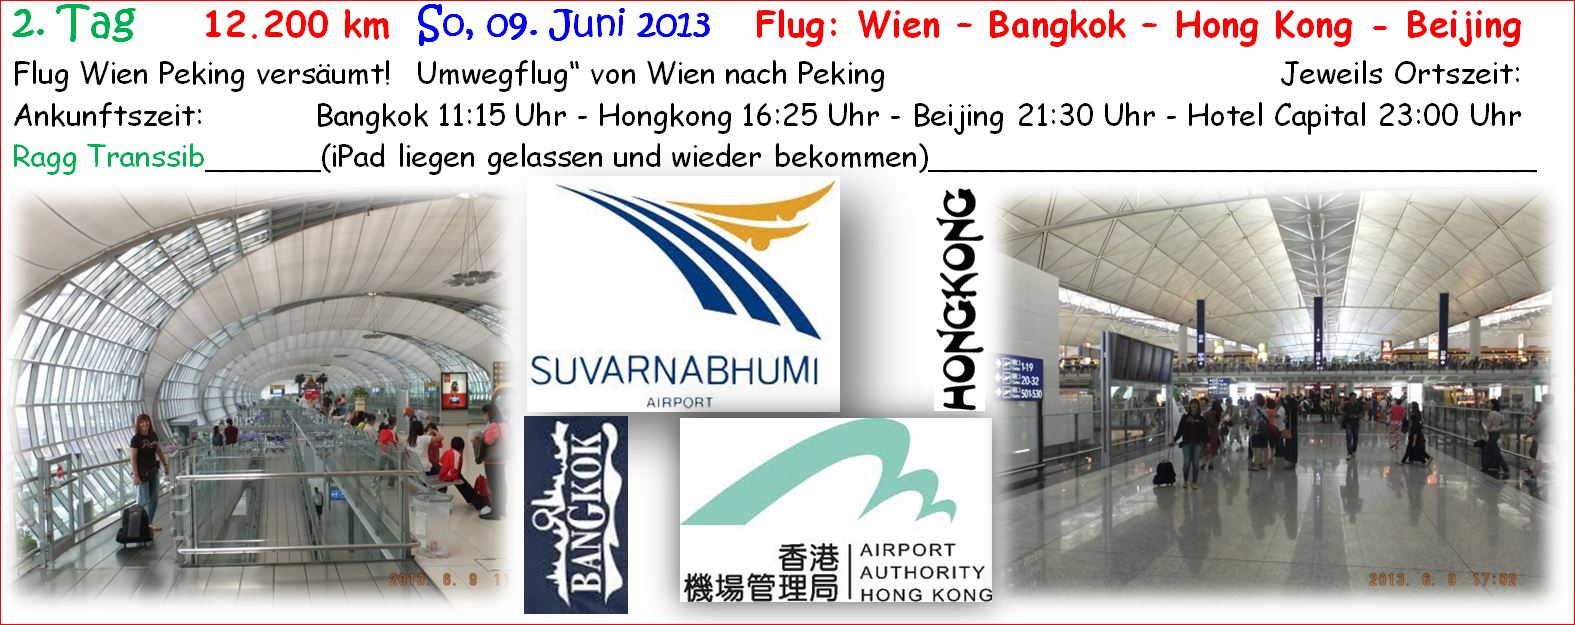 ragg 2013-06-09 - 1110Aweb - Transsib - Wien Bangkok Hongkong Beijing - Tag 02 - S05 B01